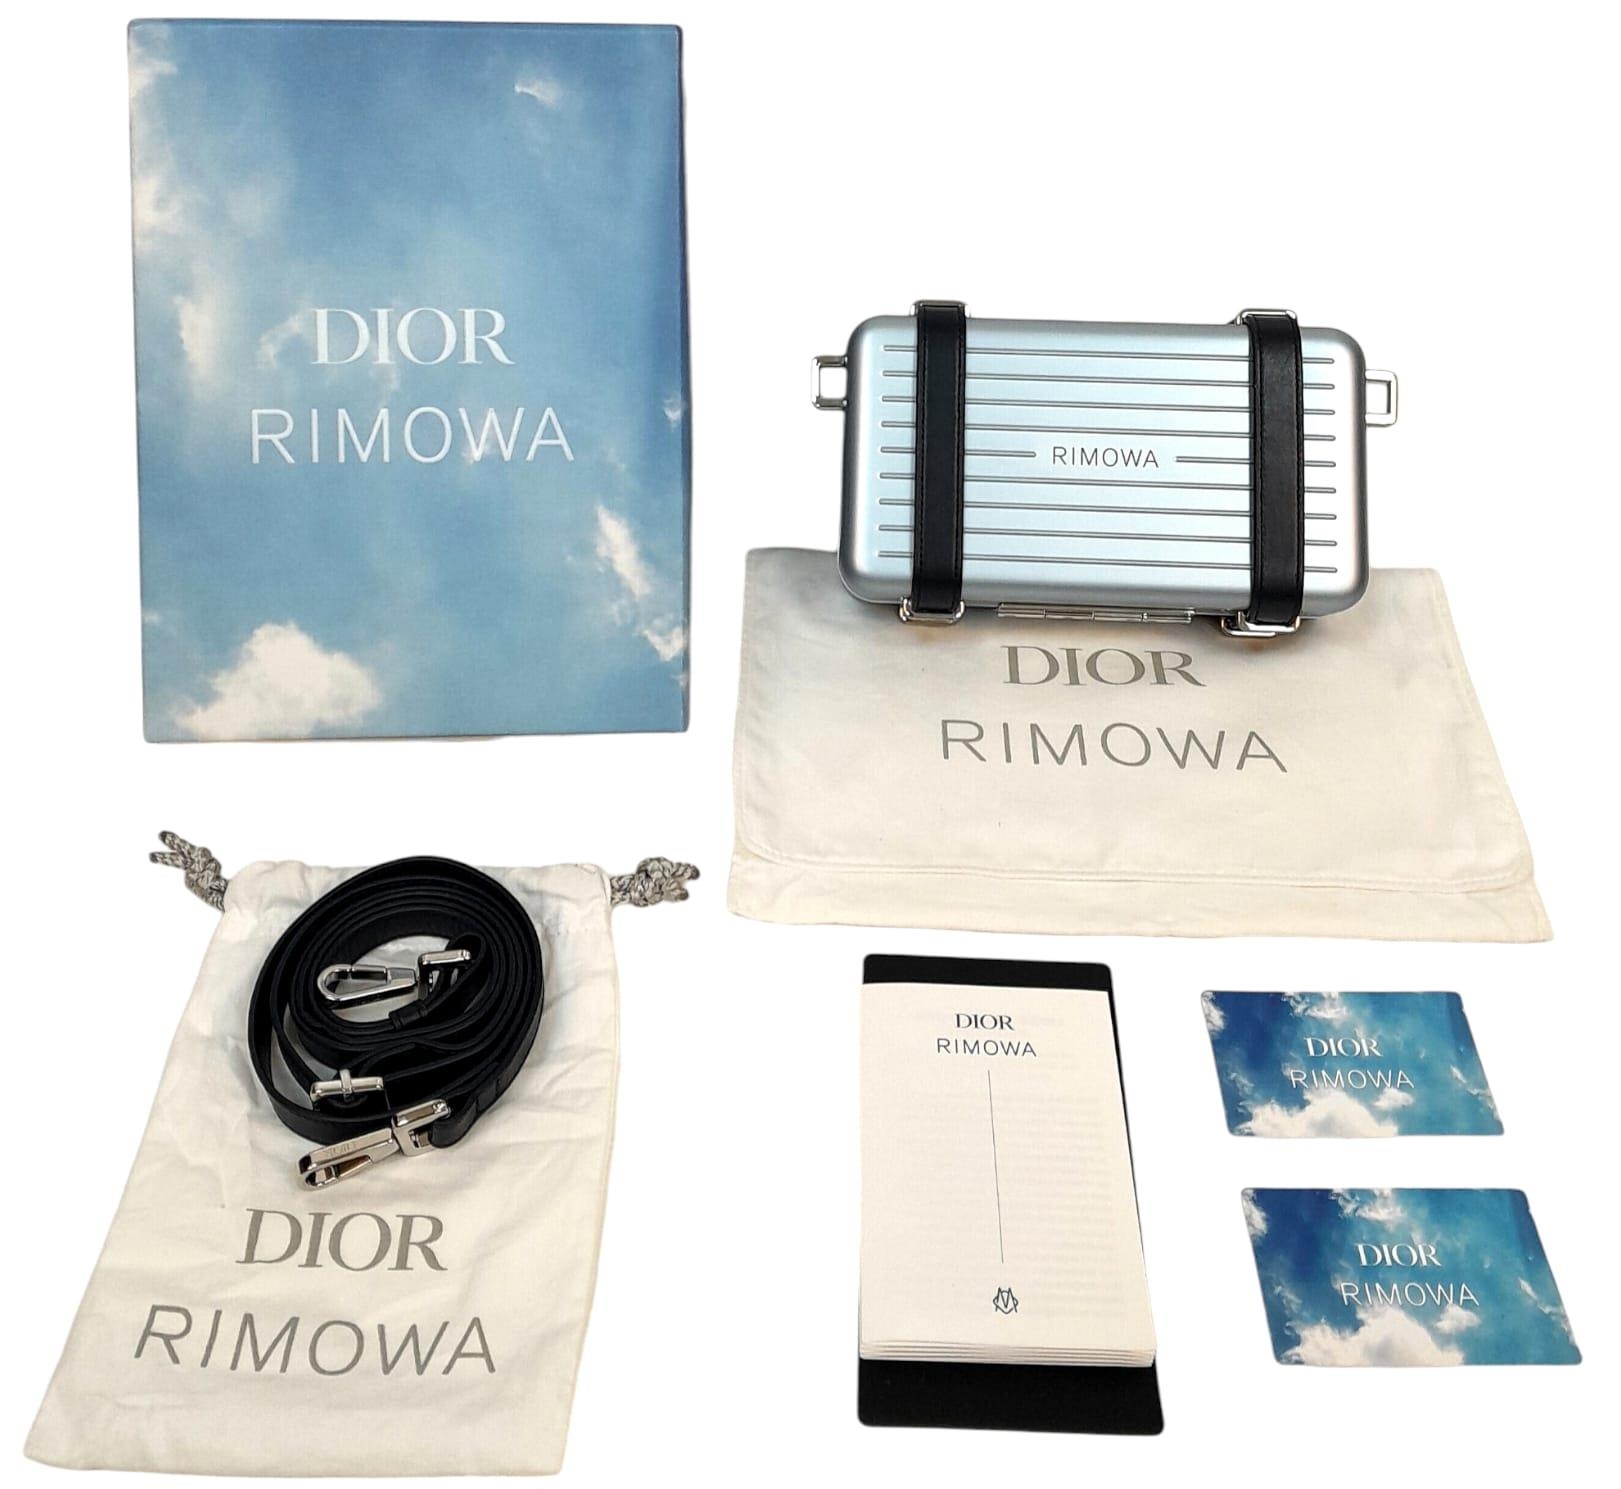 A Christian Dior x Rimowa Collaboration Ice Blue Clutch Bag. Aluminium exterior with silver-toned